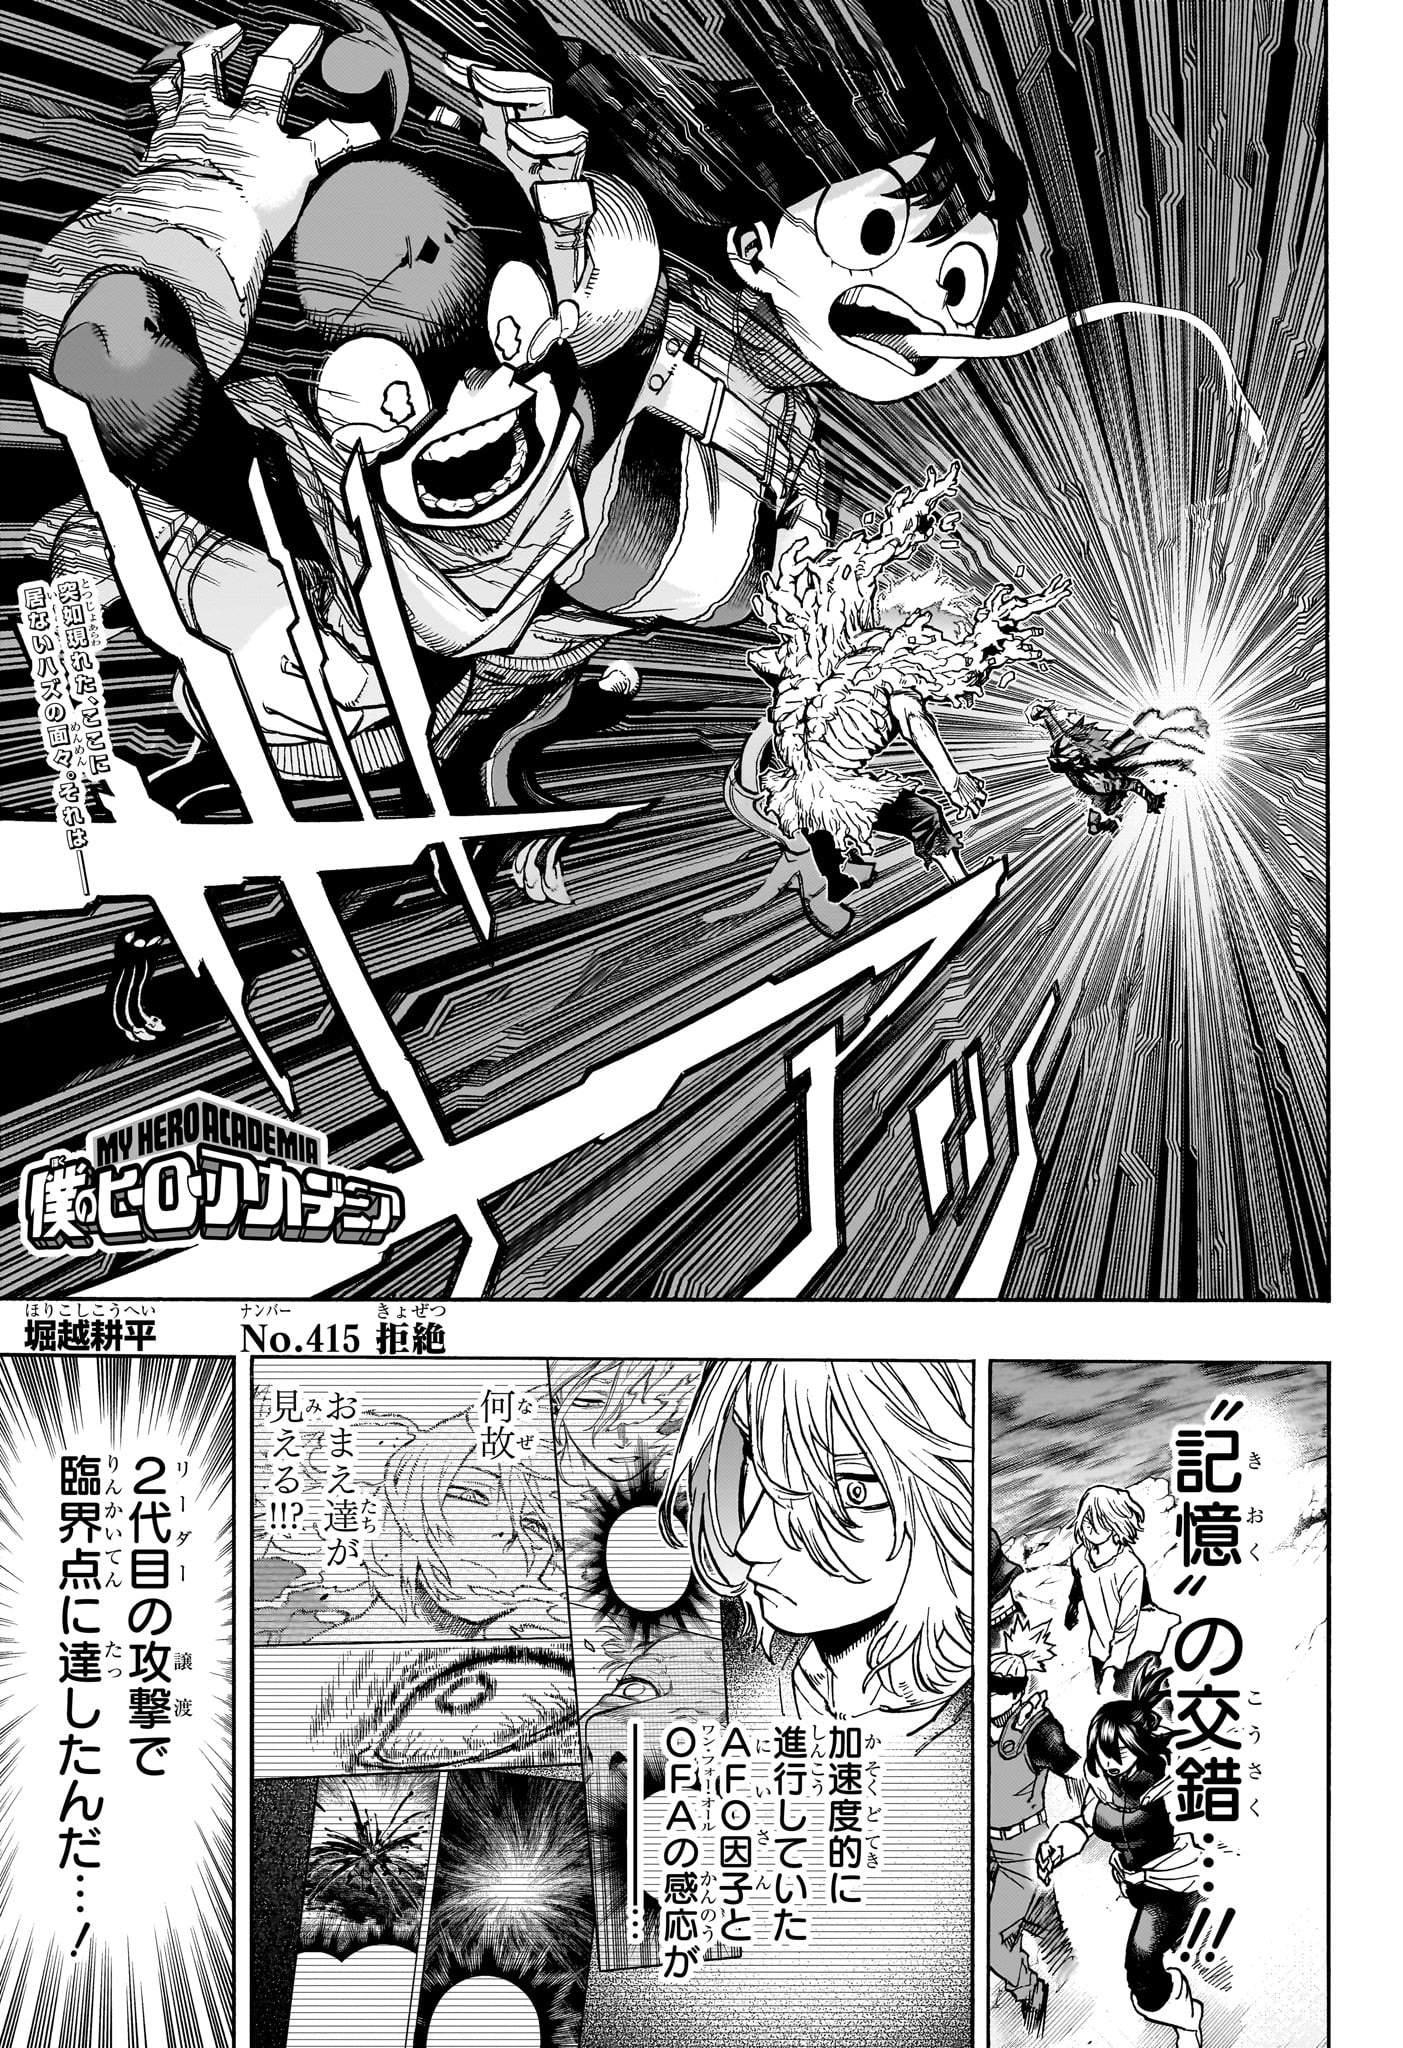 Boku no Hero Academia - Chapter 415 - Page 1